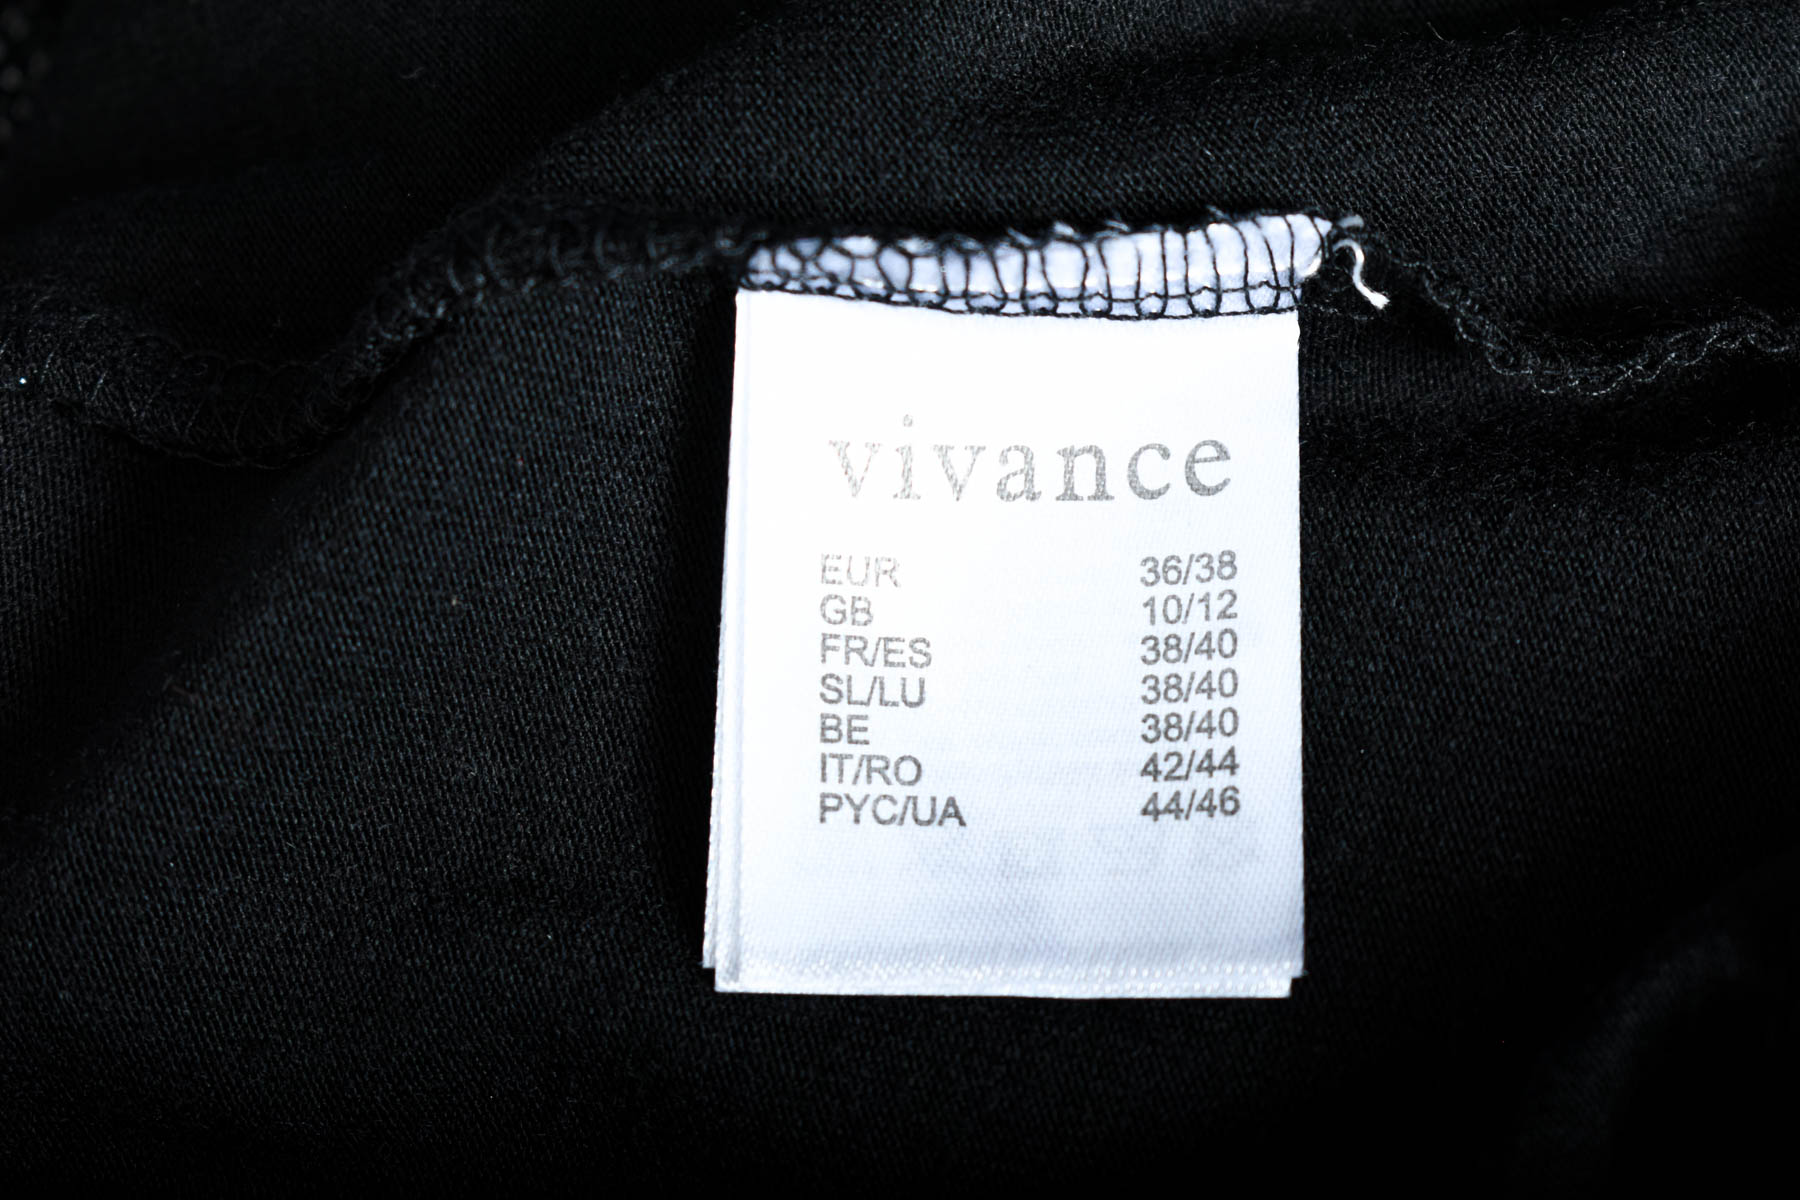 Women's blouse - Vivance - 2